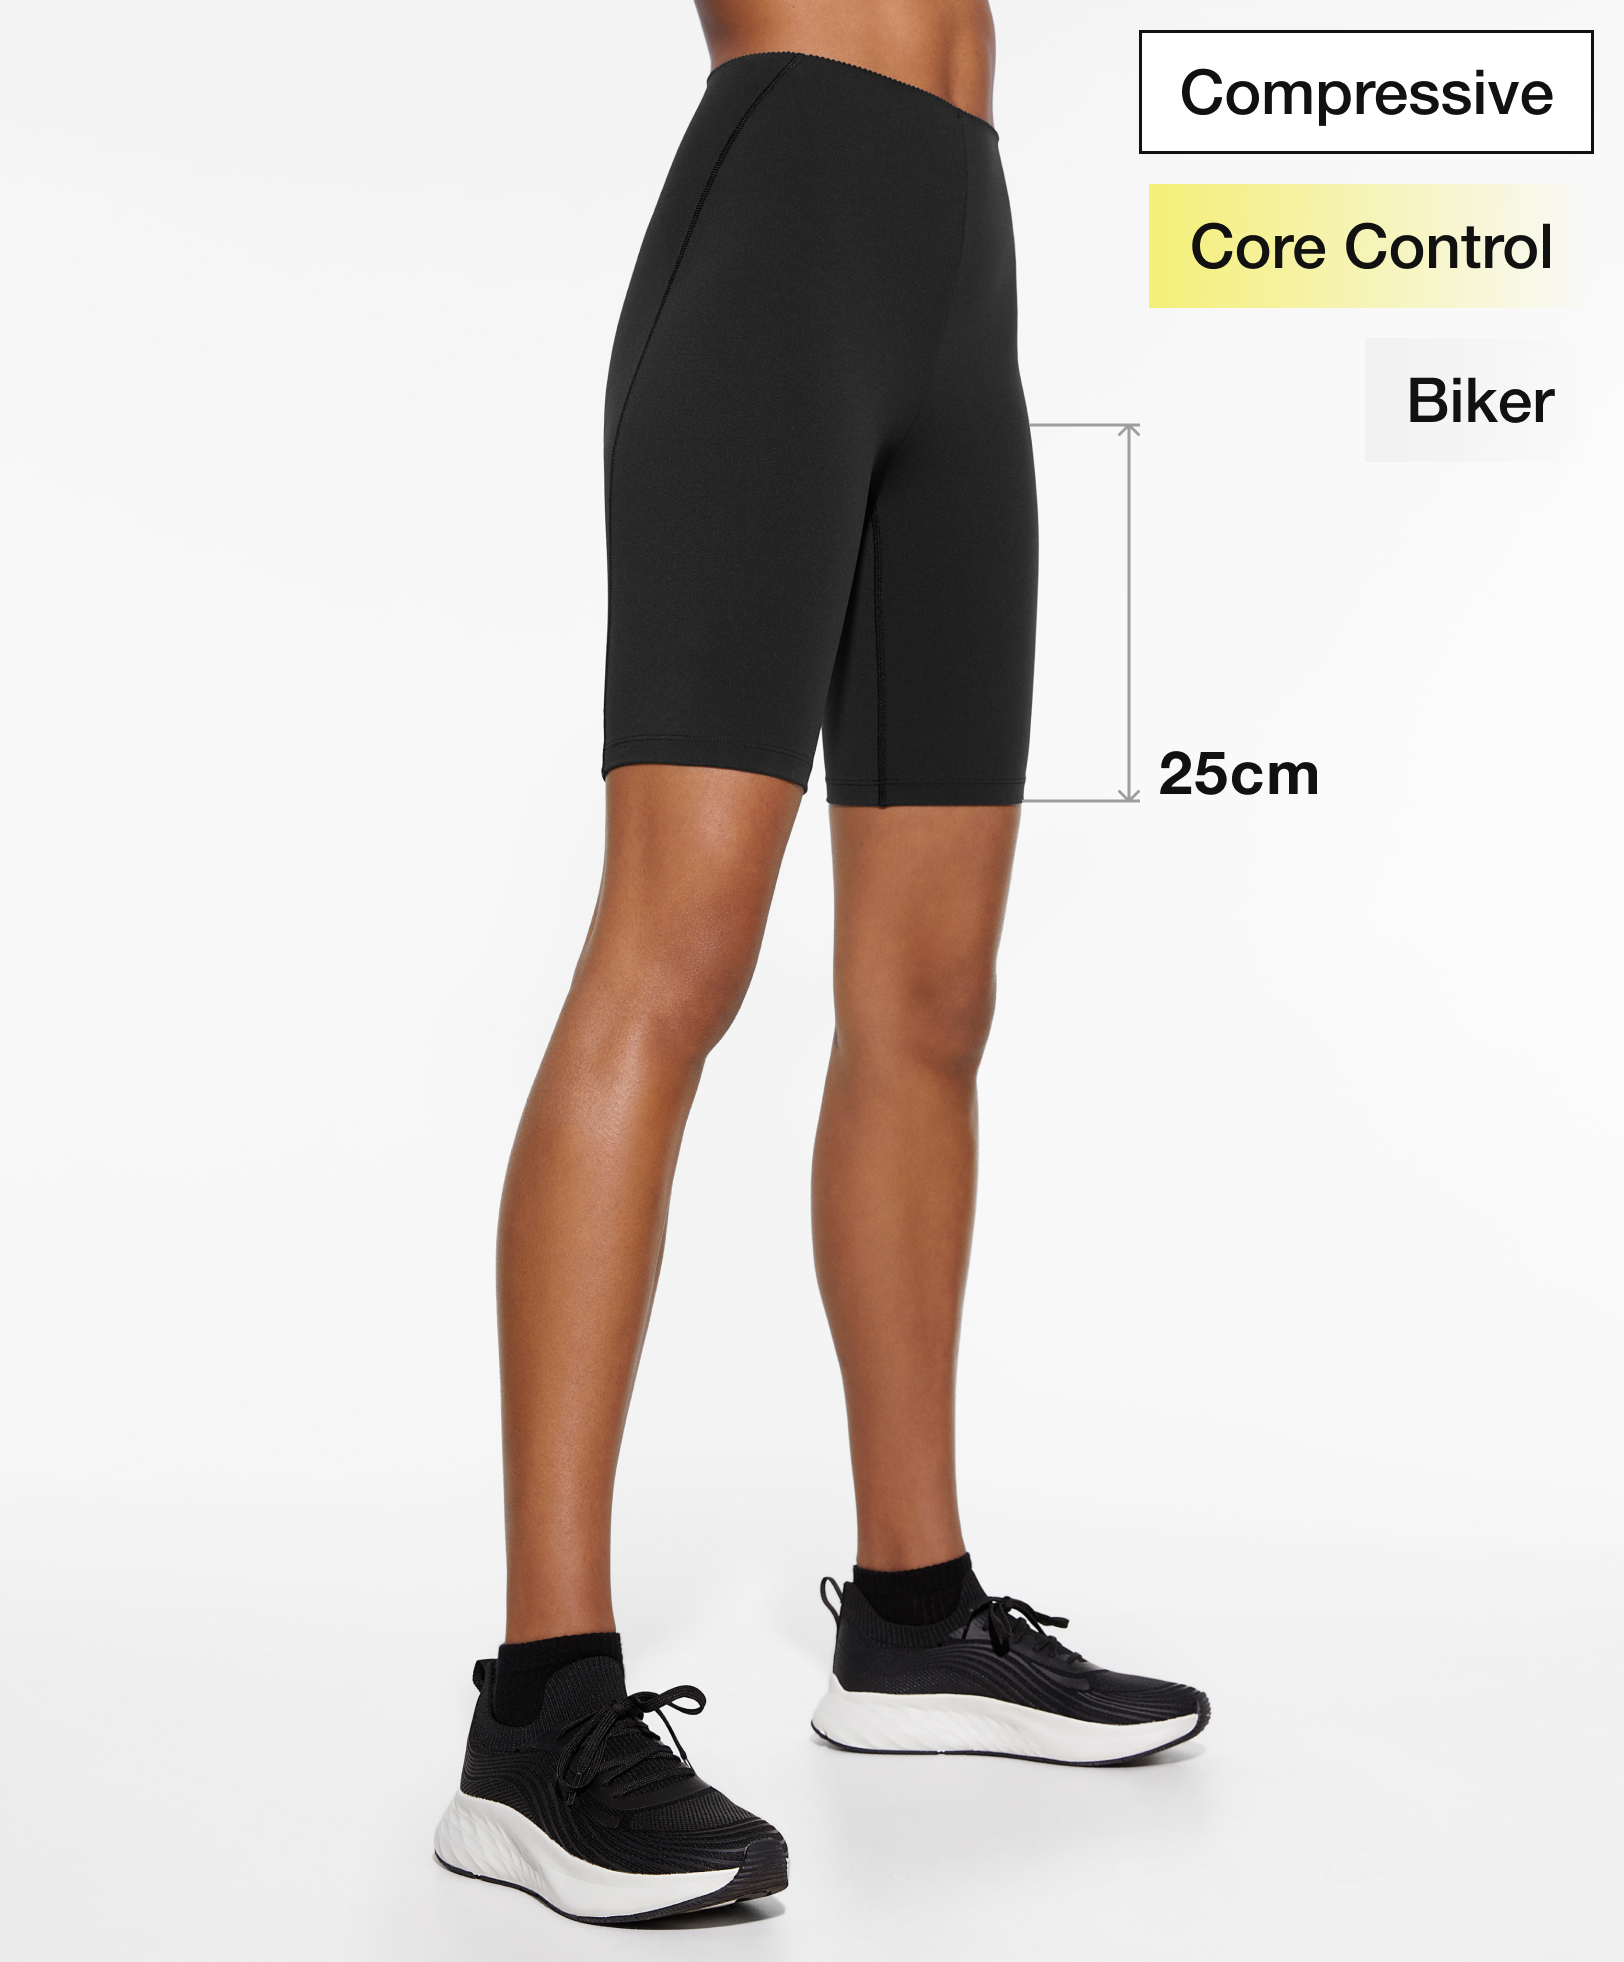 Compressive core control 25cm cycle leggings